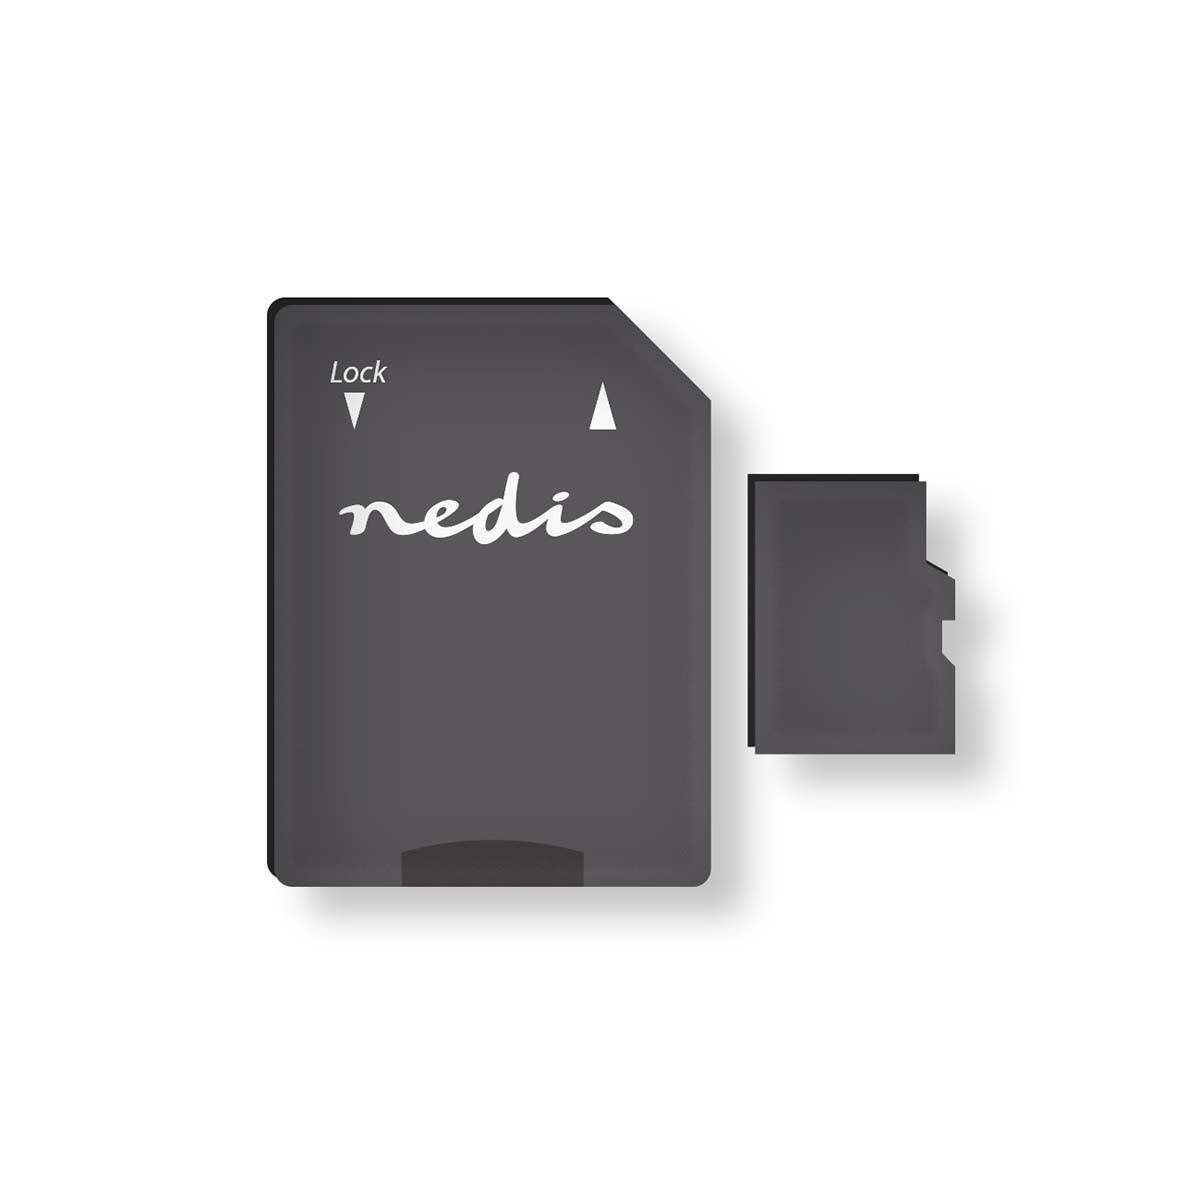 16 NEDIS Speicherkarte, MMSD128100BK, Micro-SDXC GB